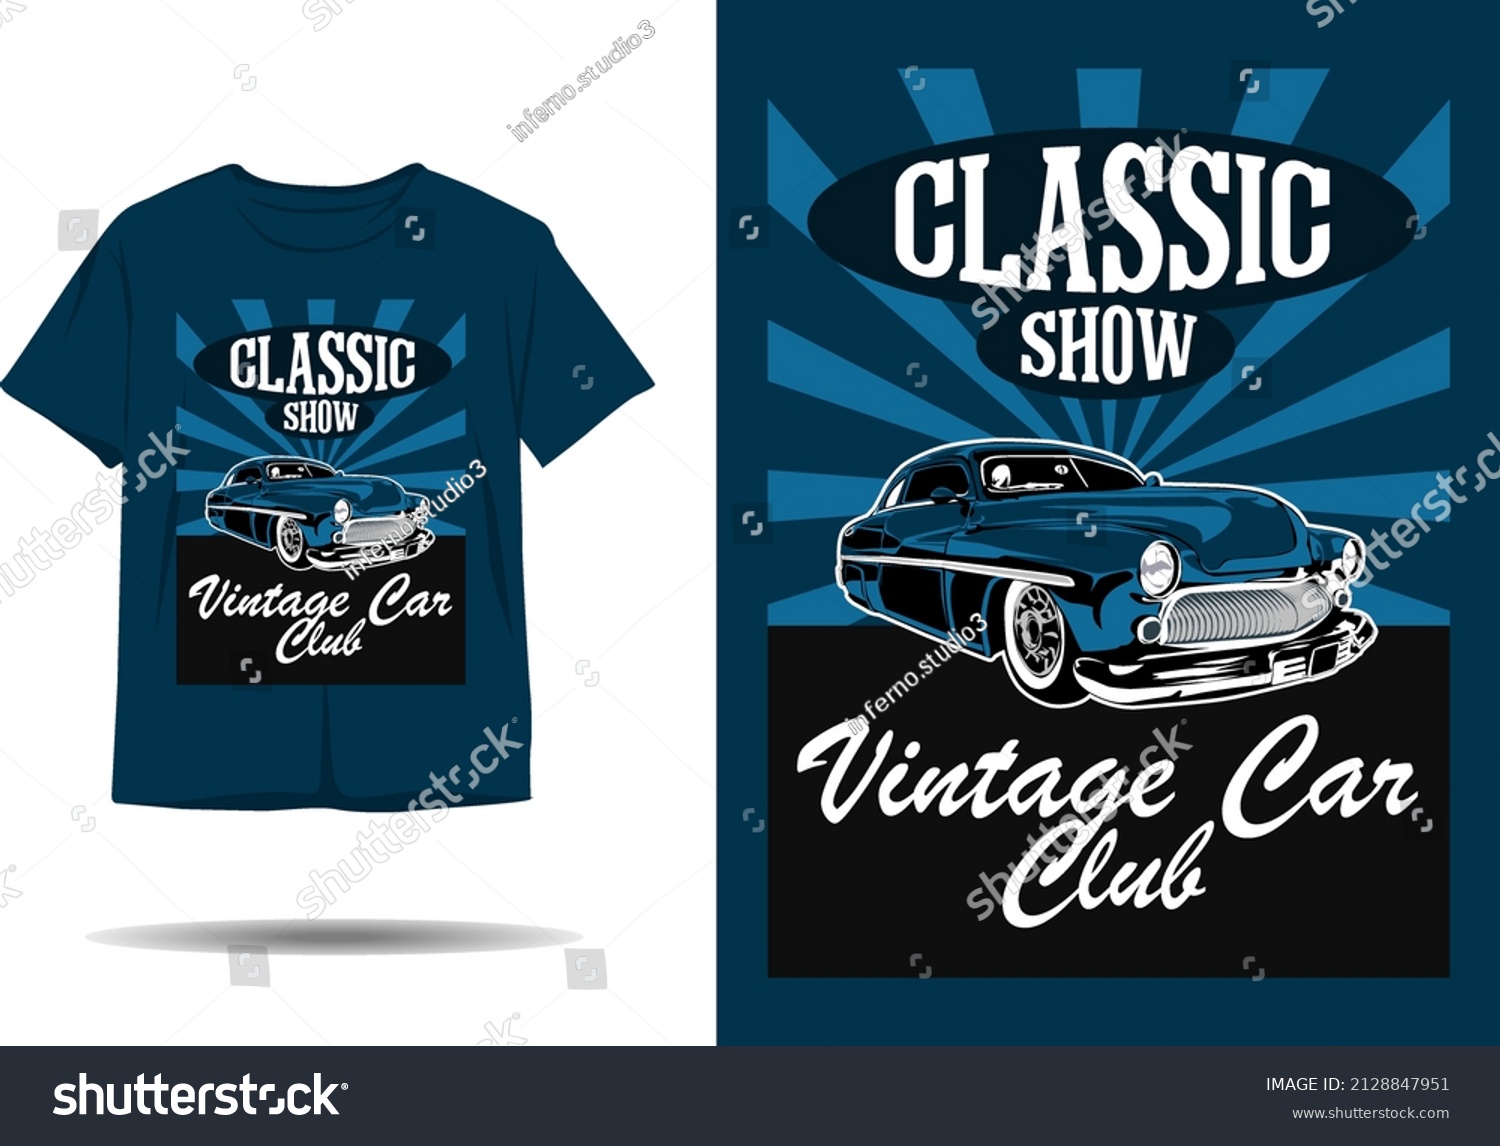 SVG of Classic show vintage car club illustration t shirt design svg